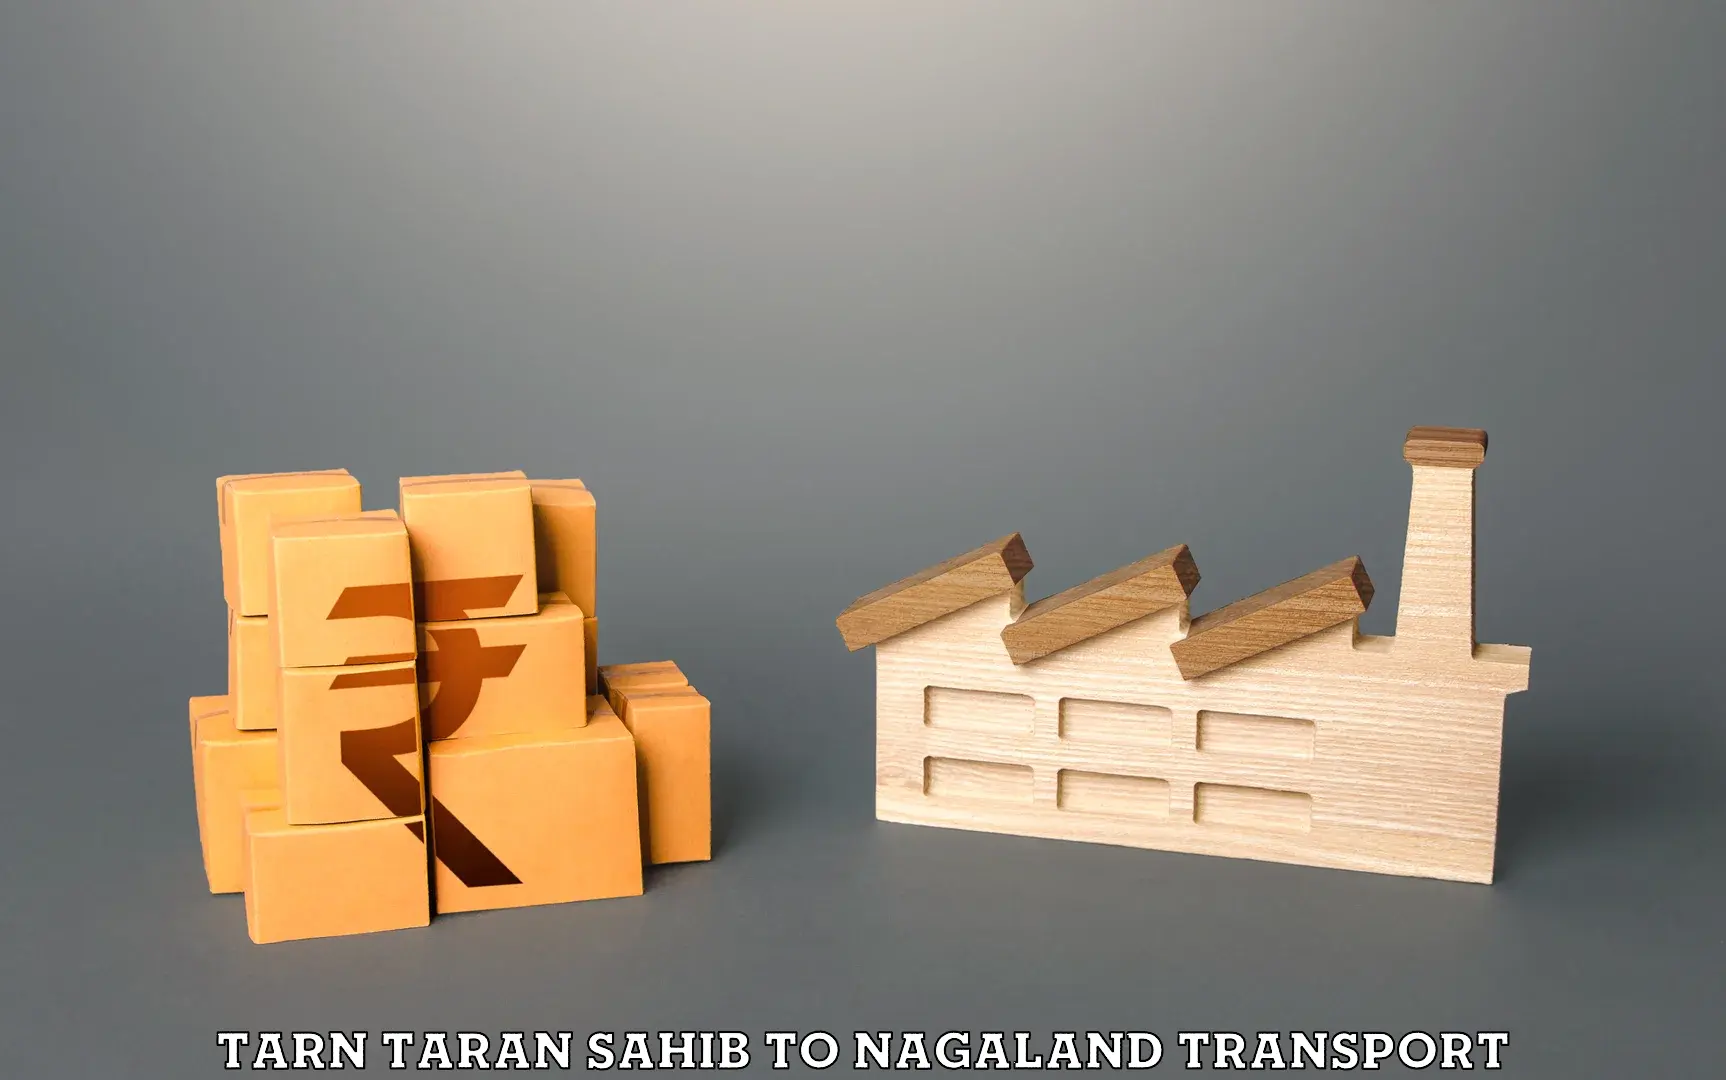 Daily transport service Tarn Taran Sahib to Nagaland